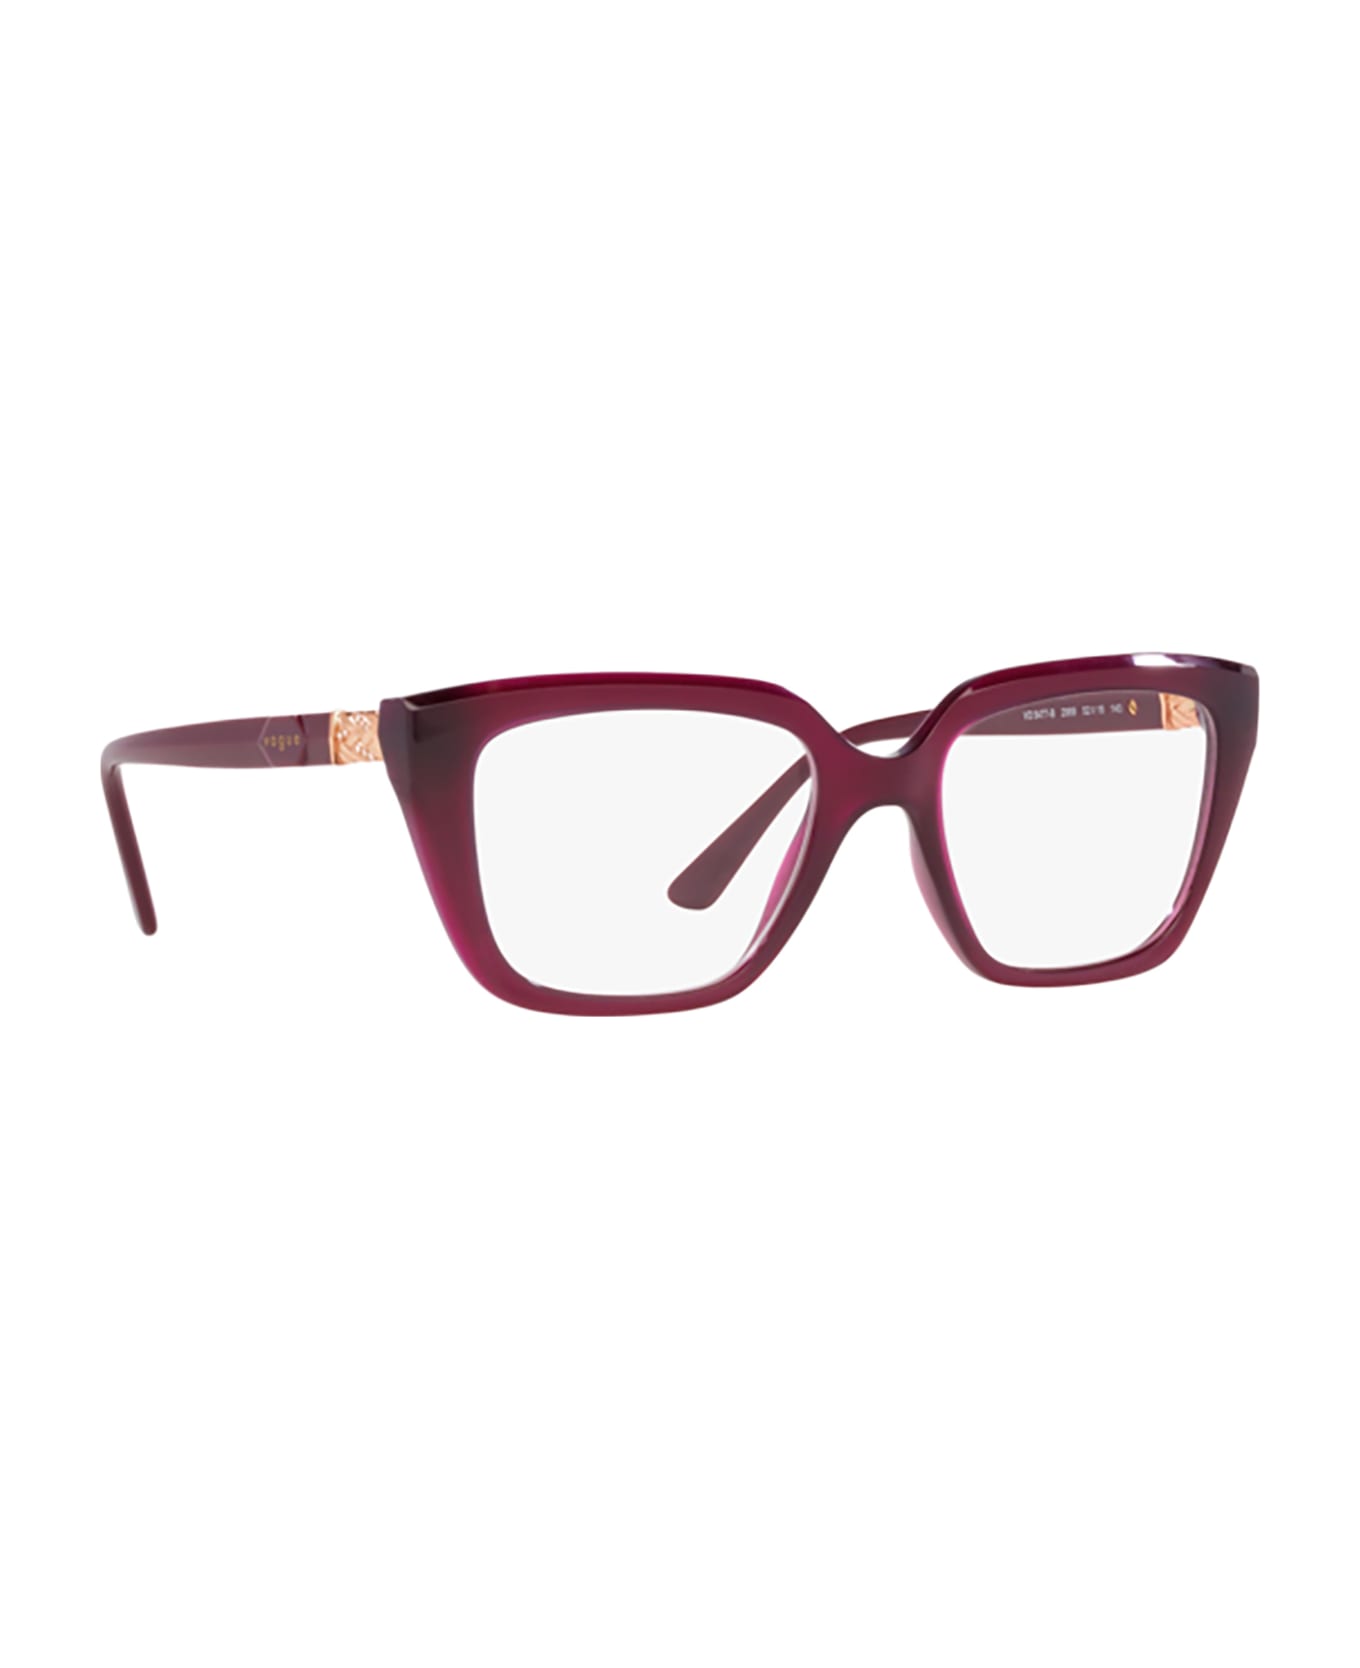 Vogue Eyewear Vo5477b Transparent Cherry Glasses - Transparent Cherry